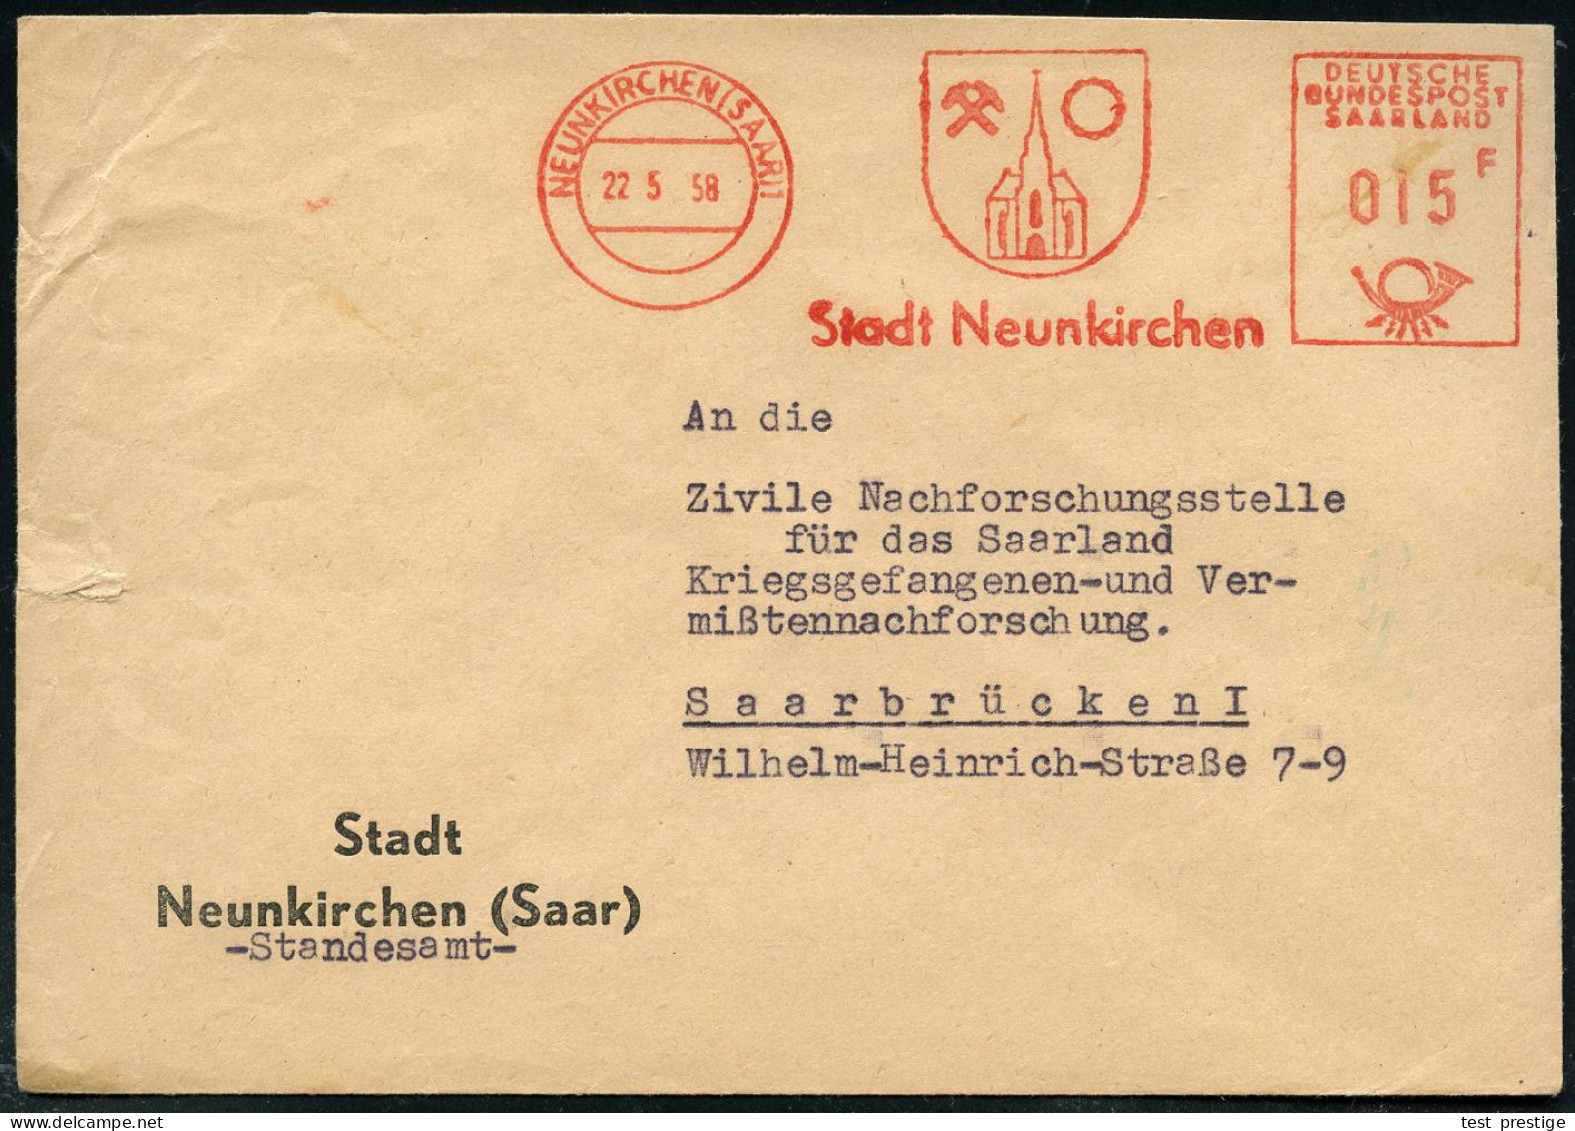 NEUNKIRCHEN (SAAR)/ Stadt Neunkirchen 1958 (22.5.) AFS Francotyp "DEUTSCHE BUNDESPOST SAARLAND" 015 F. (Stadtwappen) Kom - Other & Unclassified